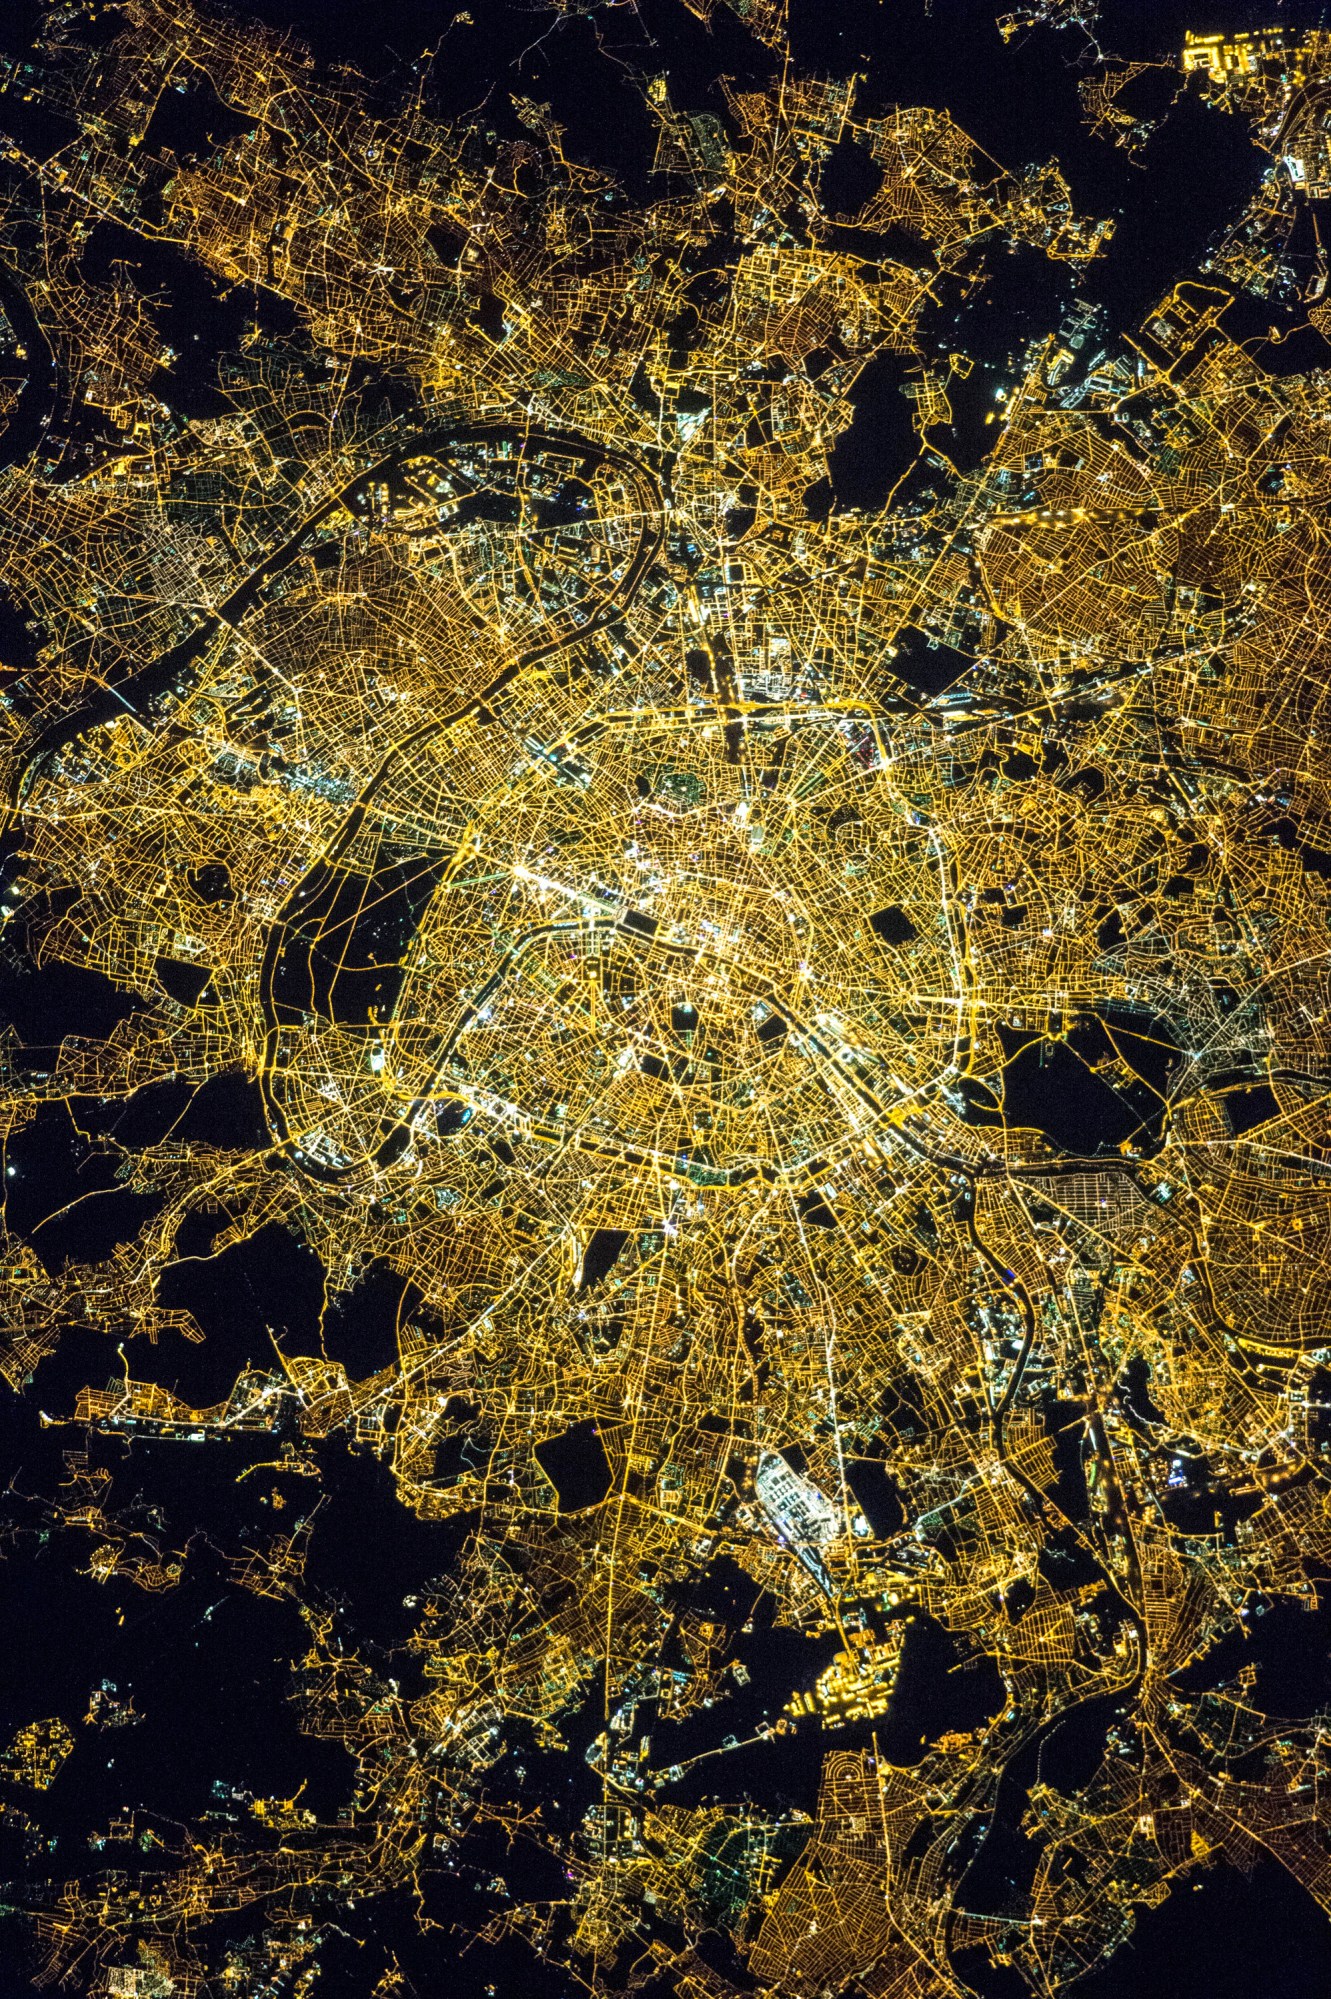 a satellite view of Paris at night